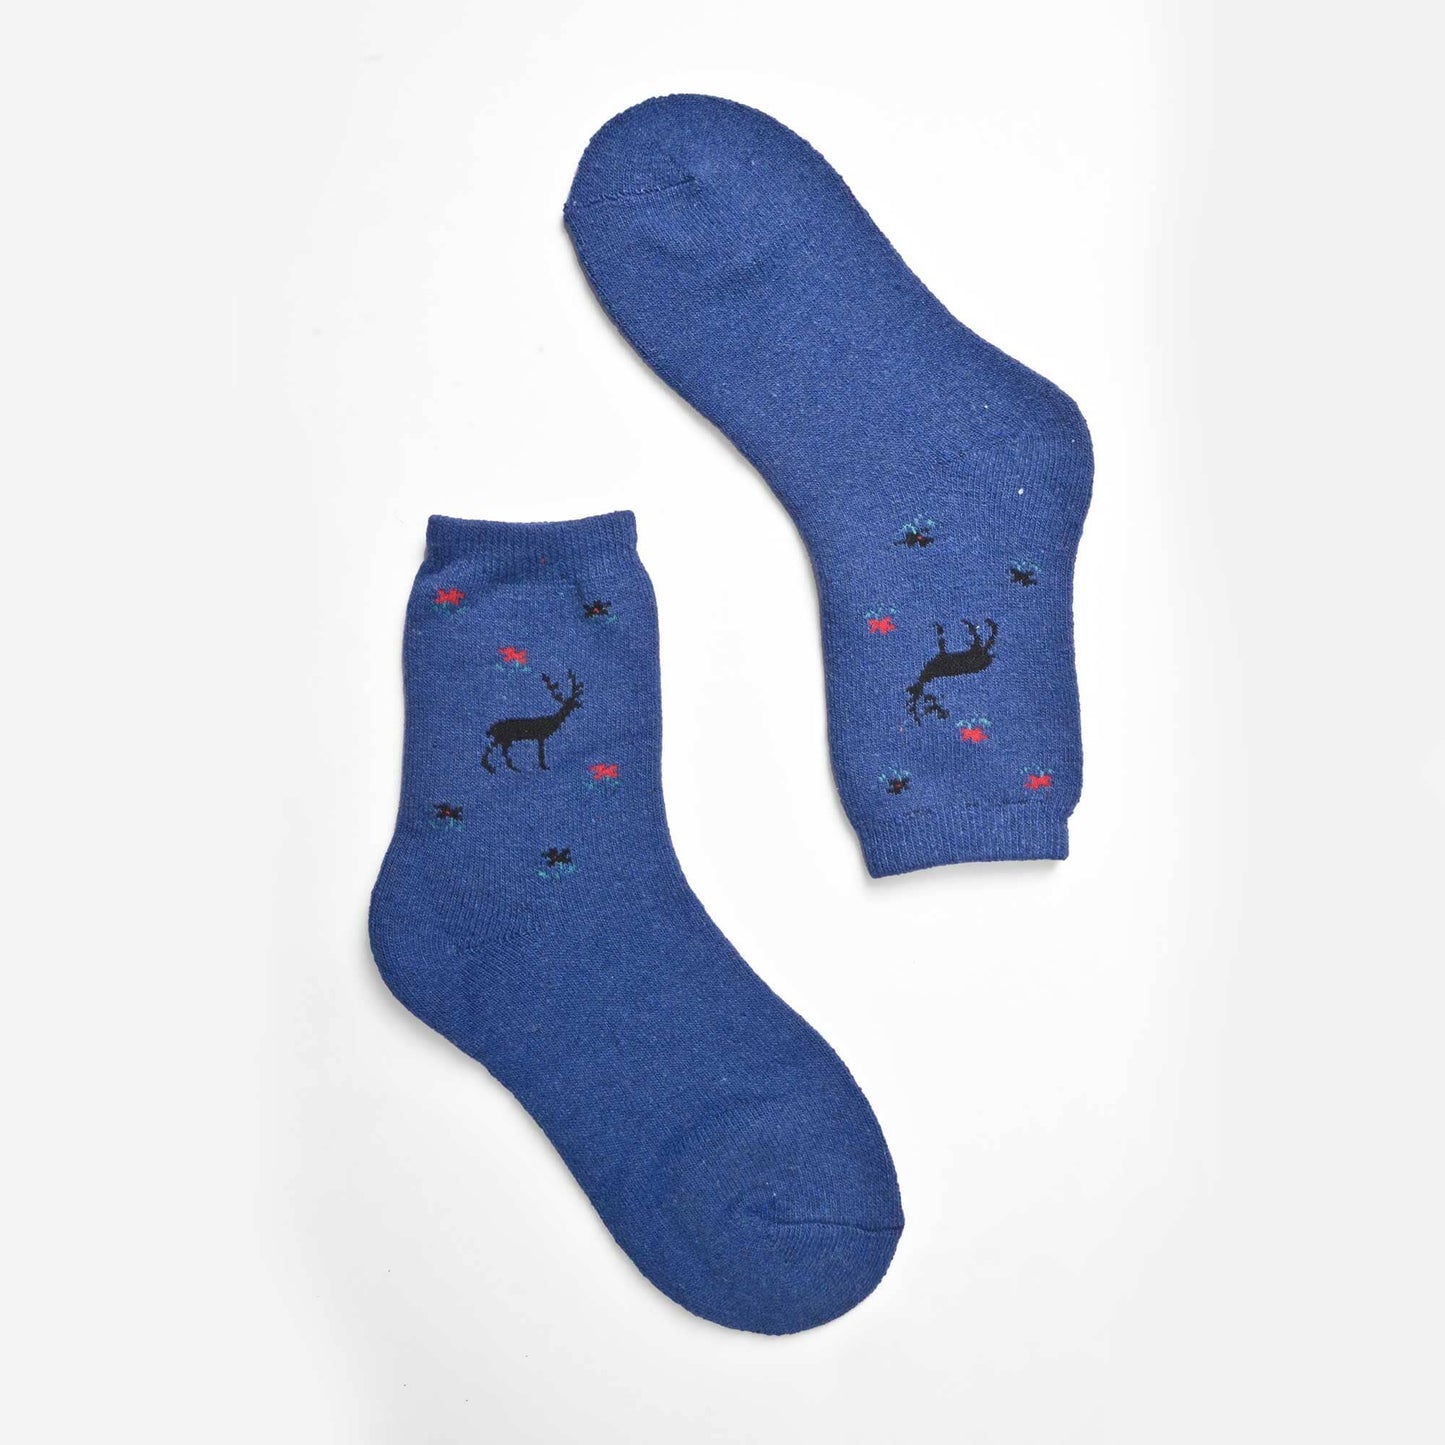 Tazoo Men's Deer Printed Crew Socks Socks SRL D10 EUR 36-41 